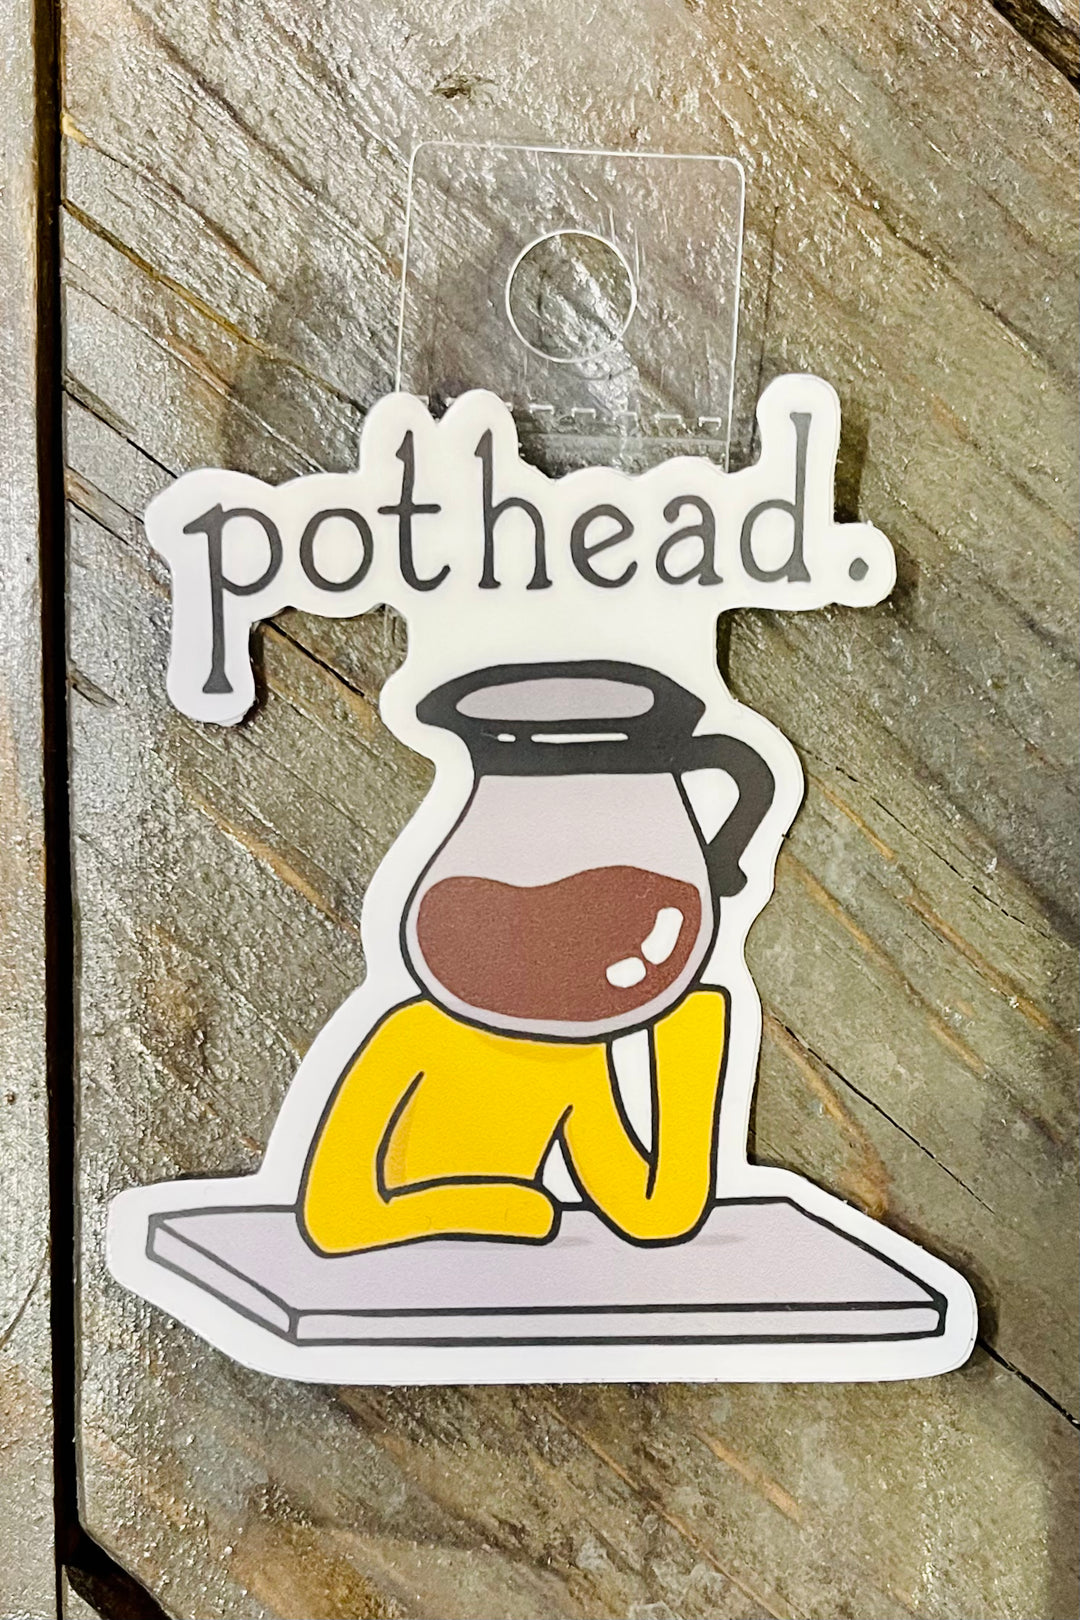 Pothead Coffee Sticker